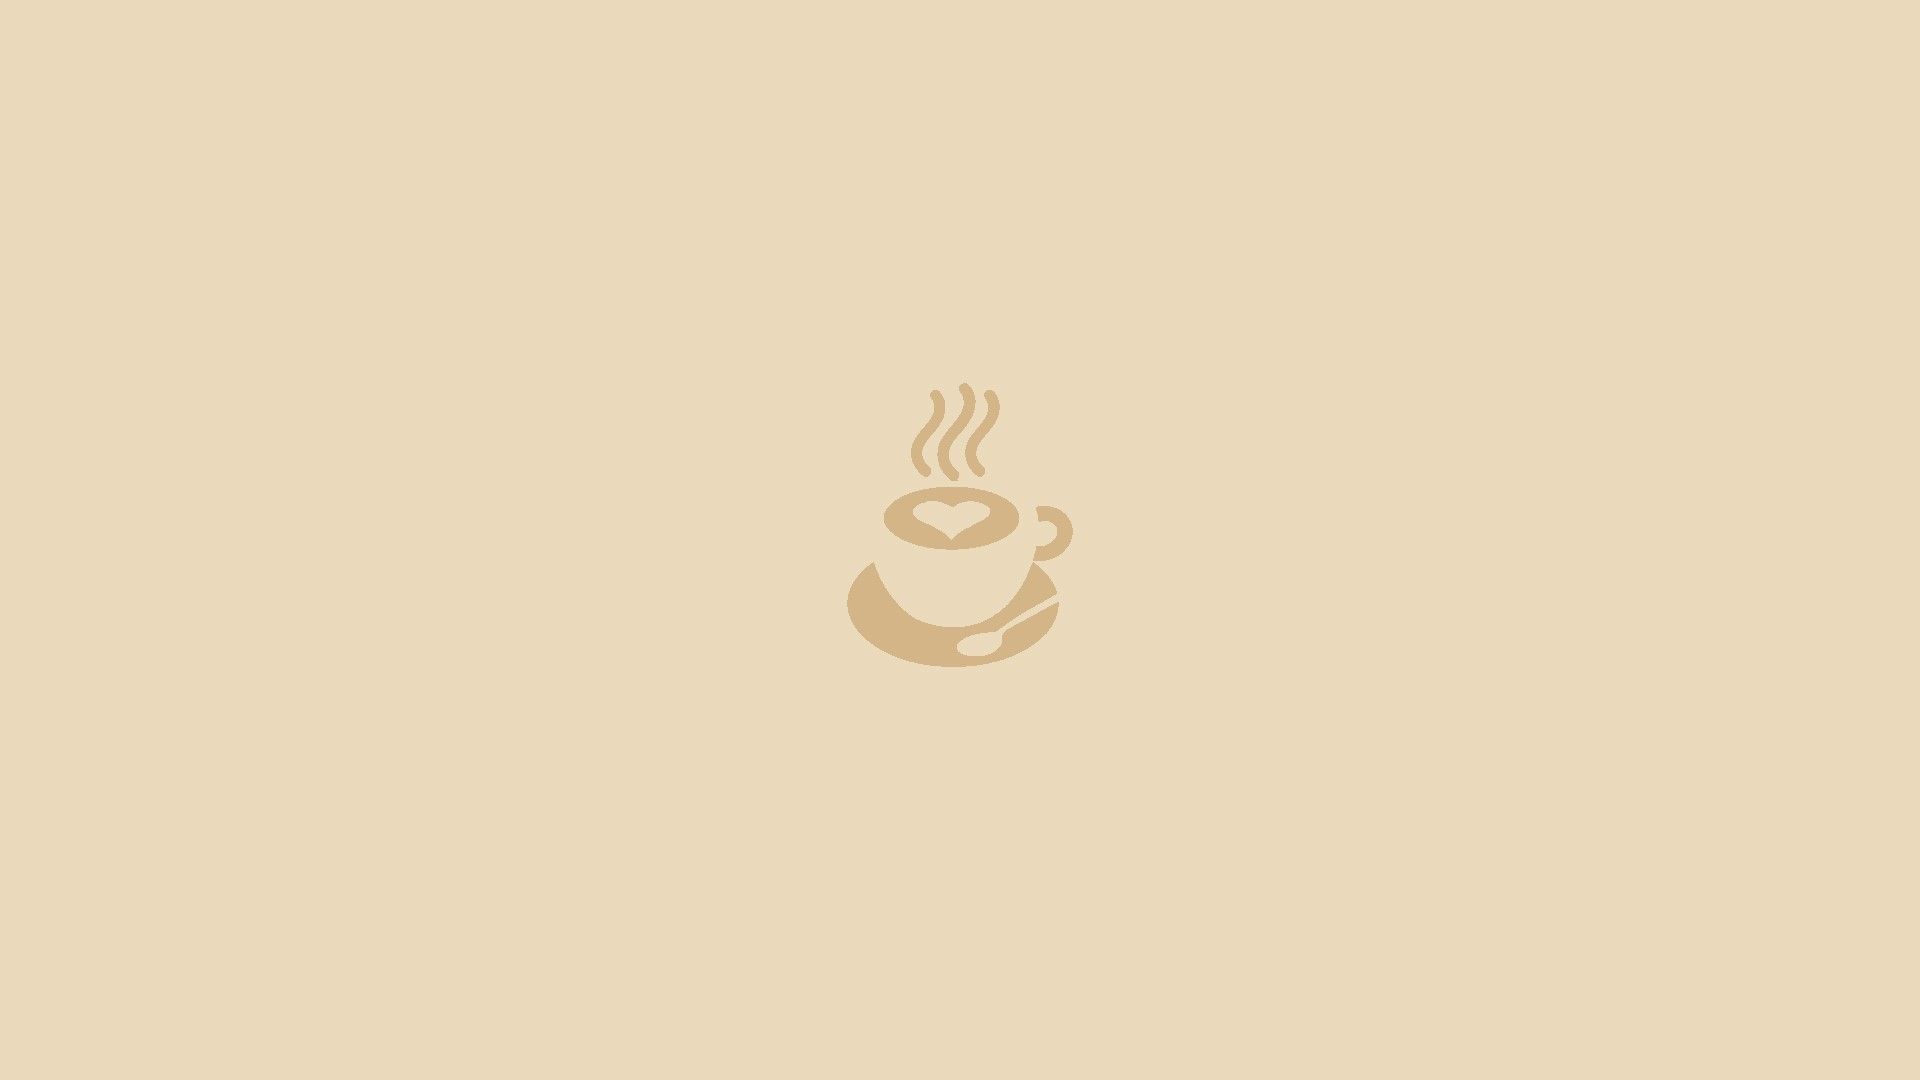 A minimalist coffee cup logo design for a cafe - Minimalist beige